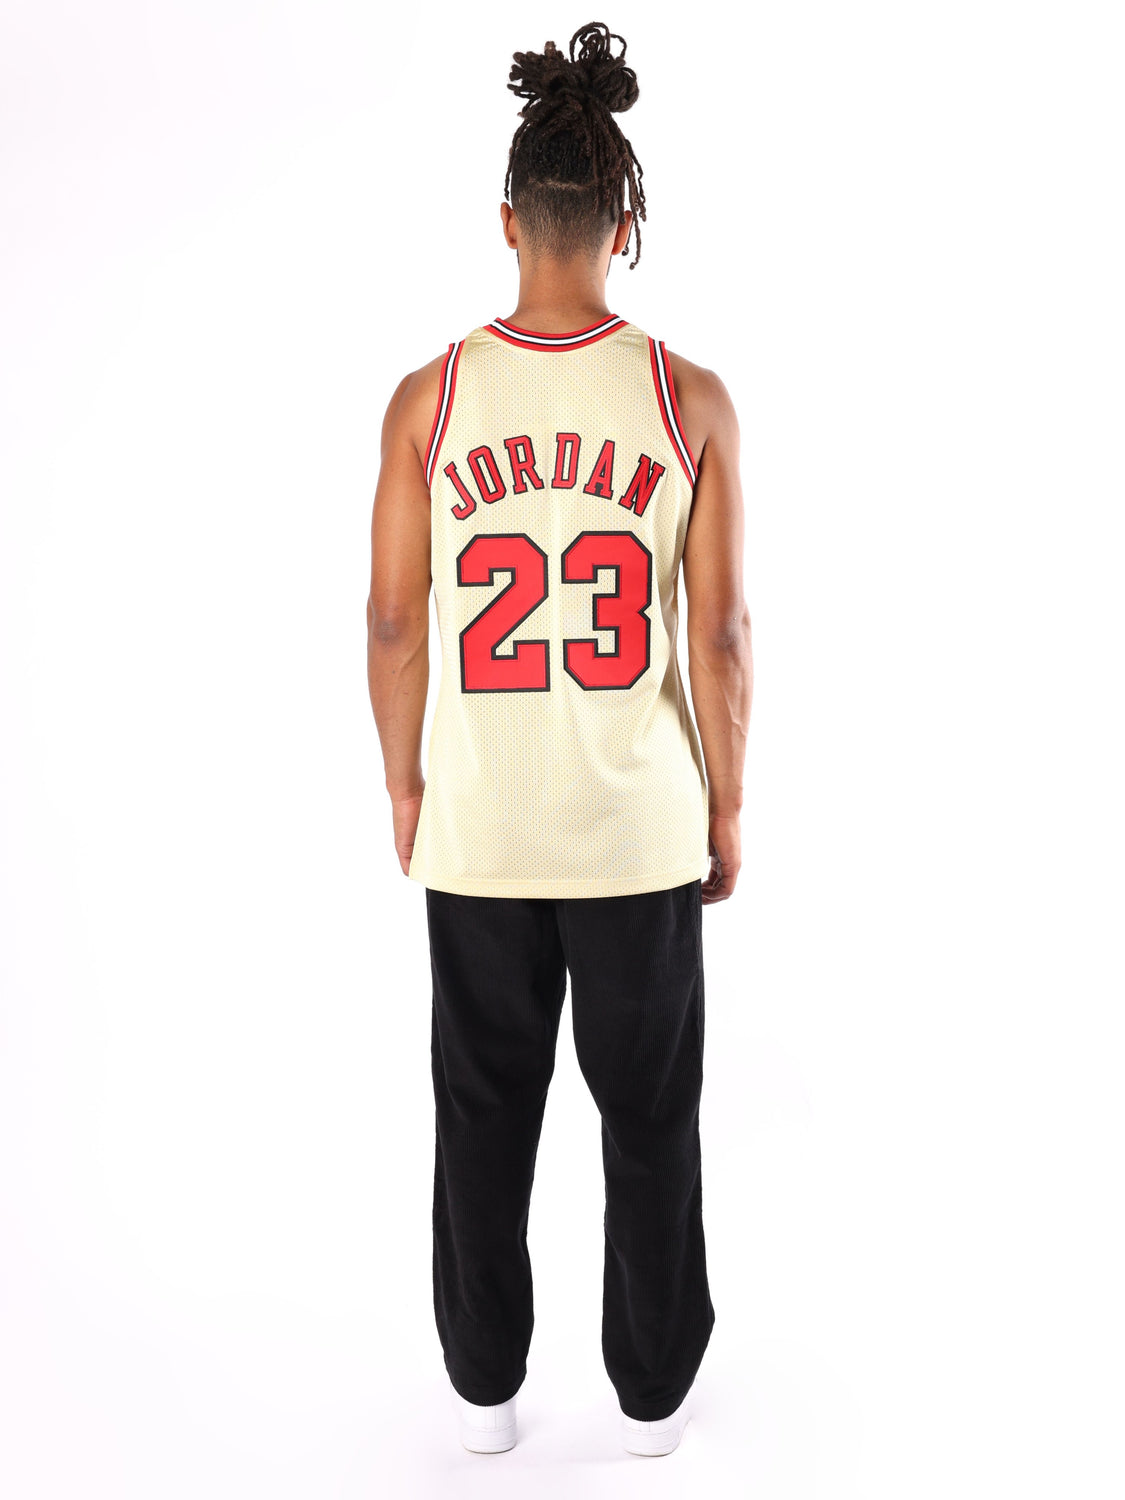 Premium Gold Jersey Chicago Bulls 1995-96 Michael Jordan - Shop